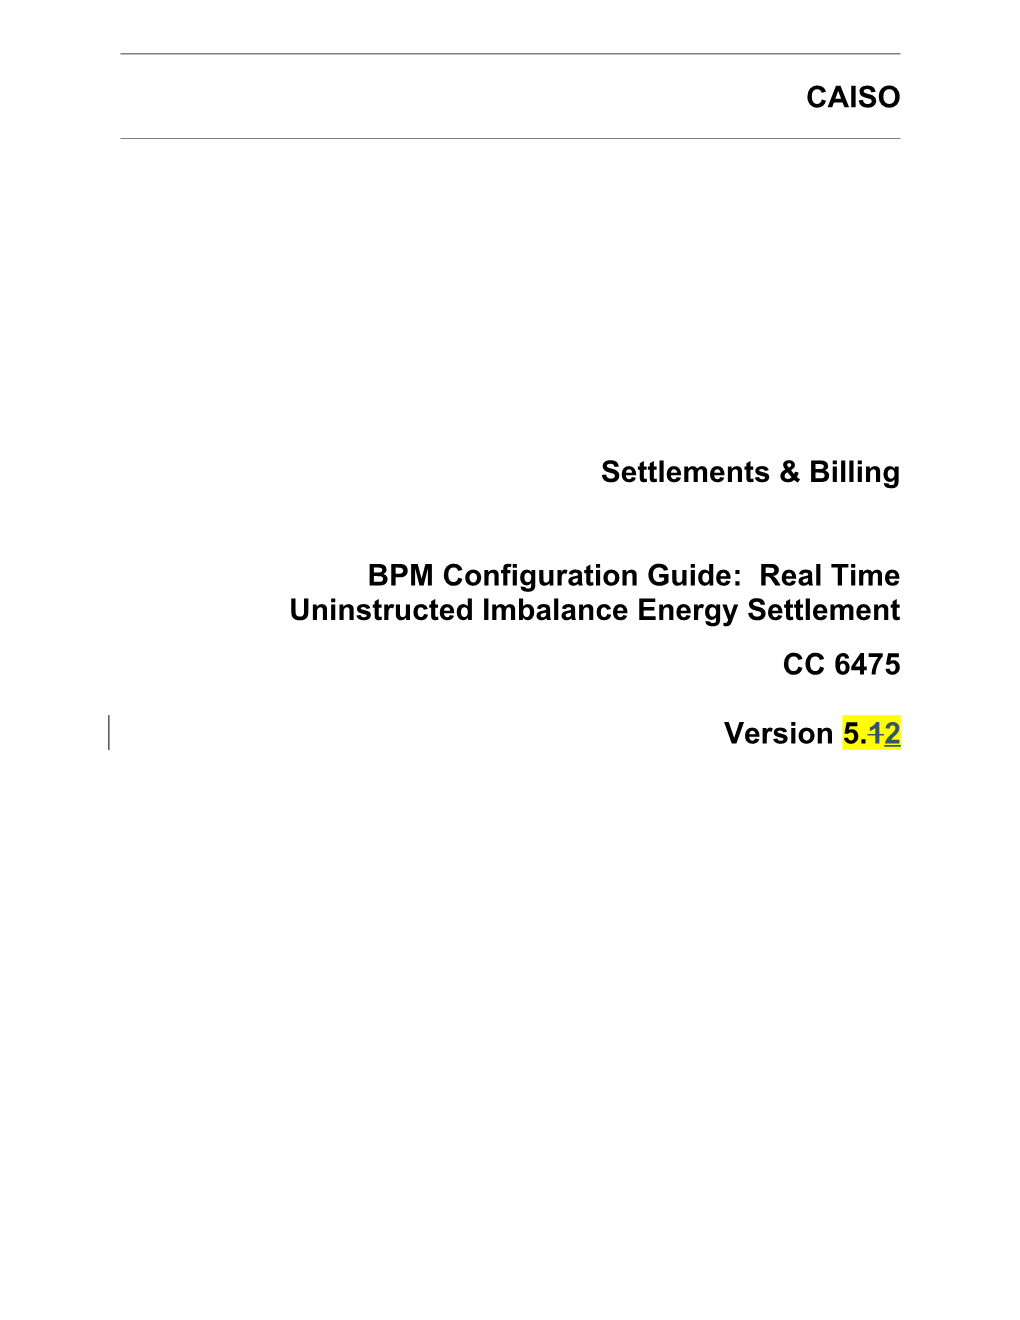 Real Time Uninstructed Imbalance Energy Settlement